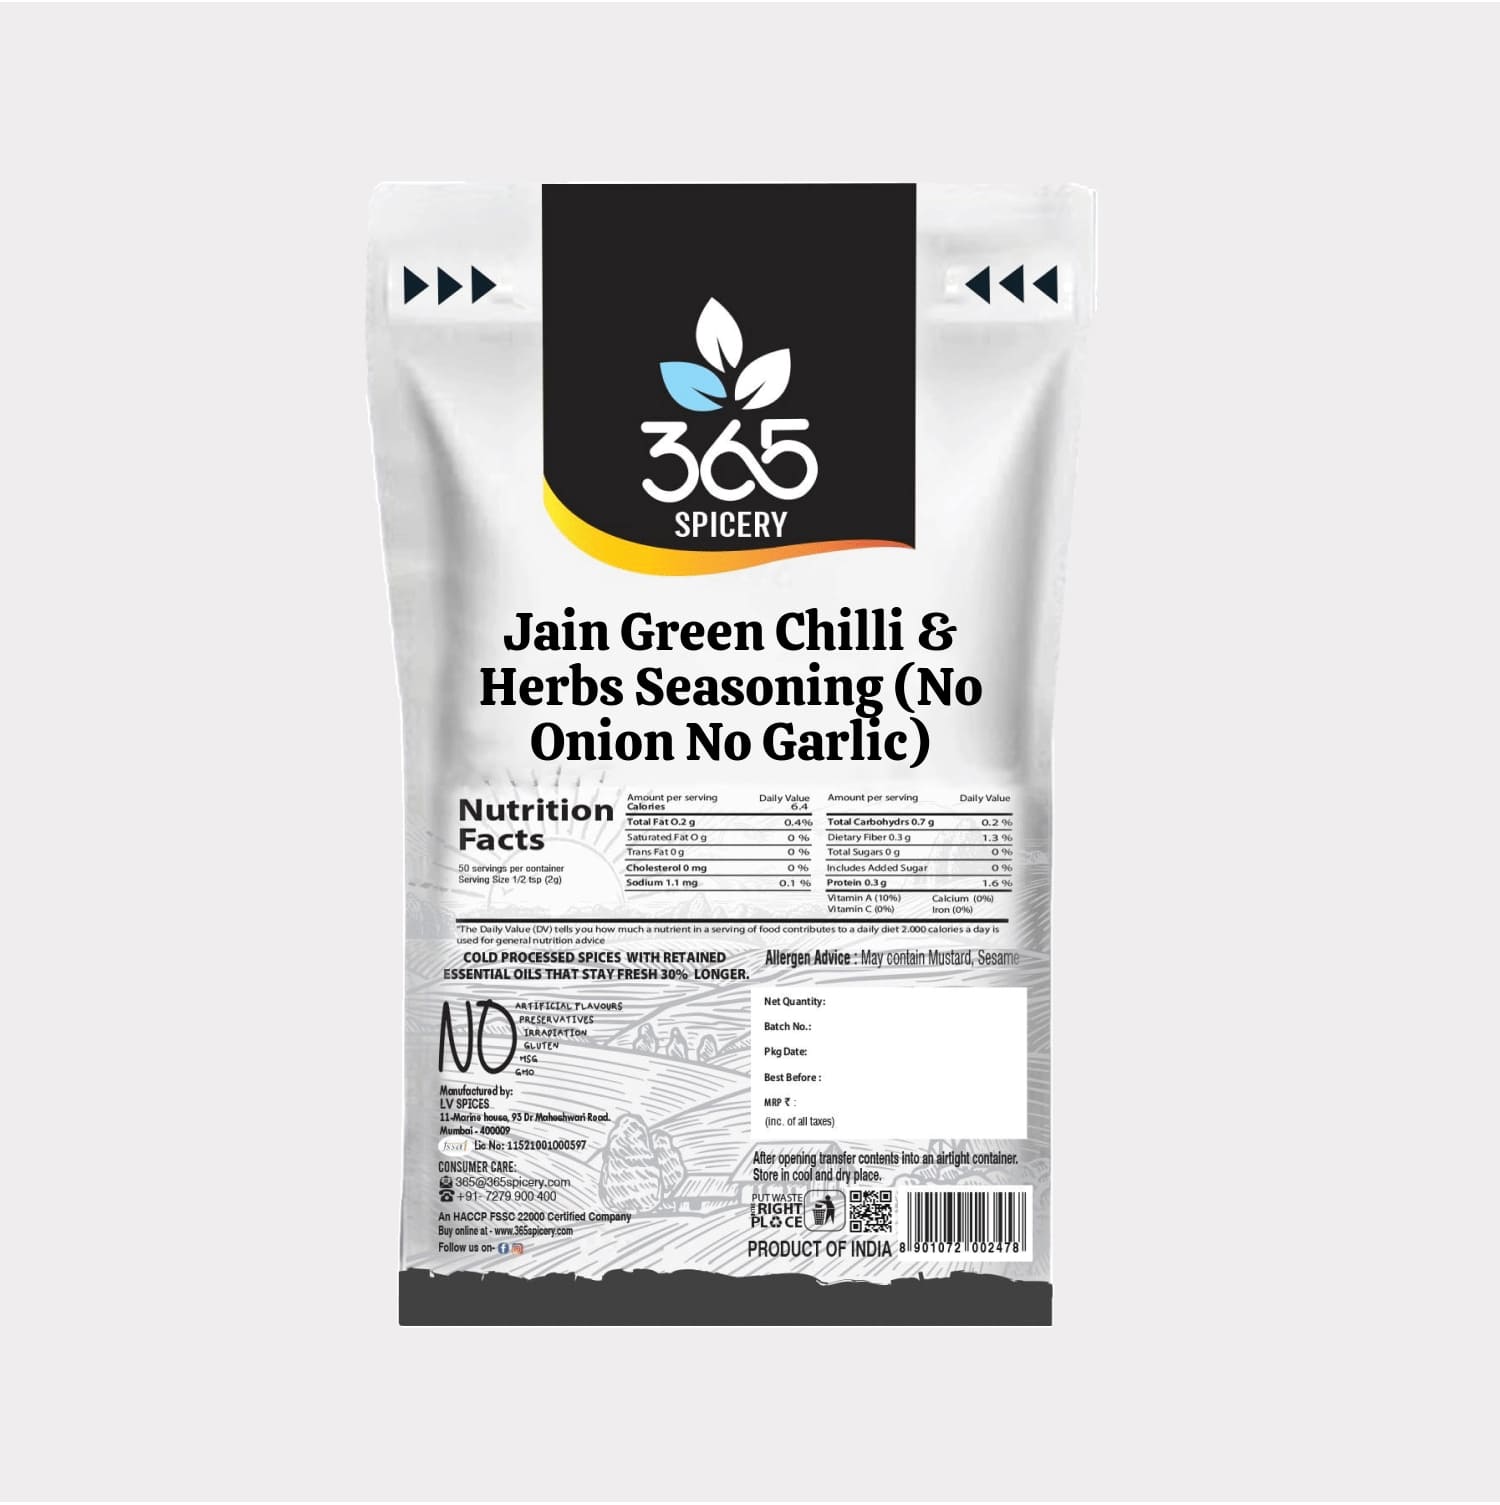 Jain Green Chilli & Herbs Seasoning (No Onion No Garlic)